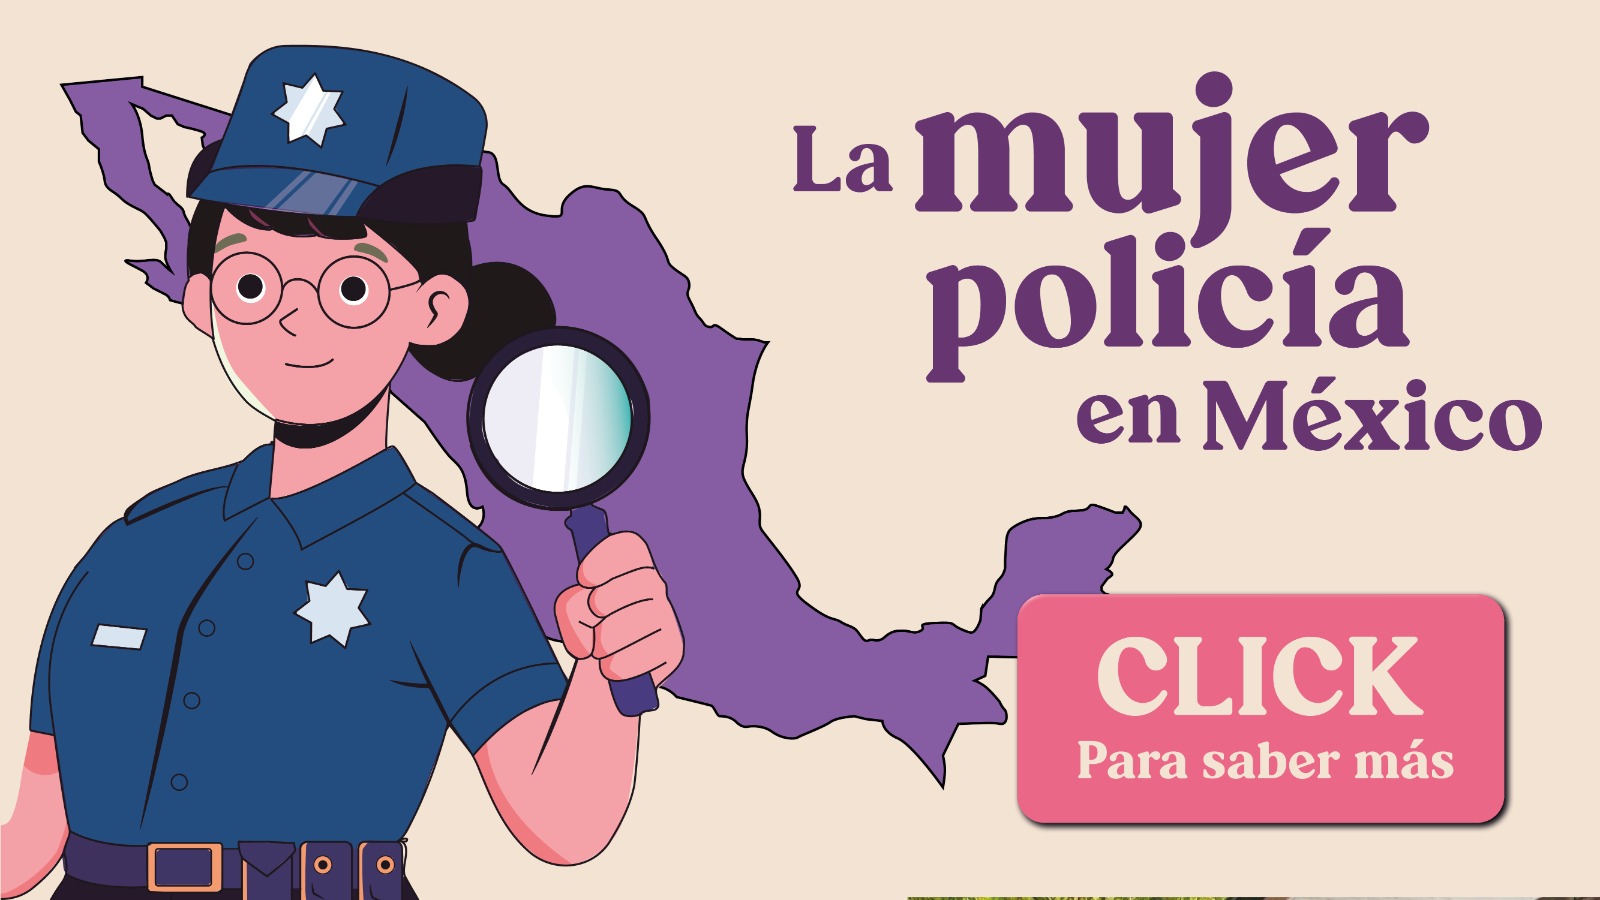 /cms/uploads/image/file/866627/5-5-mujer-policia-mexico.jpeg